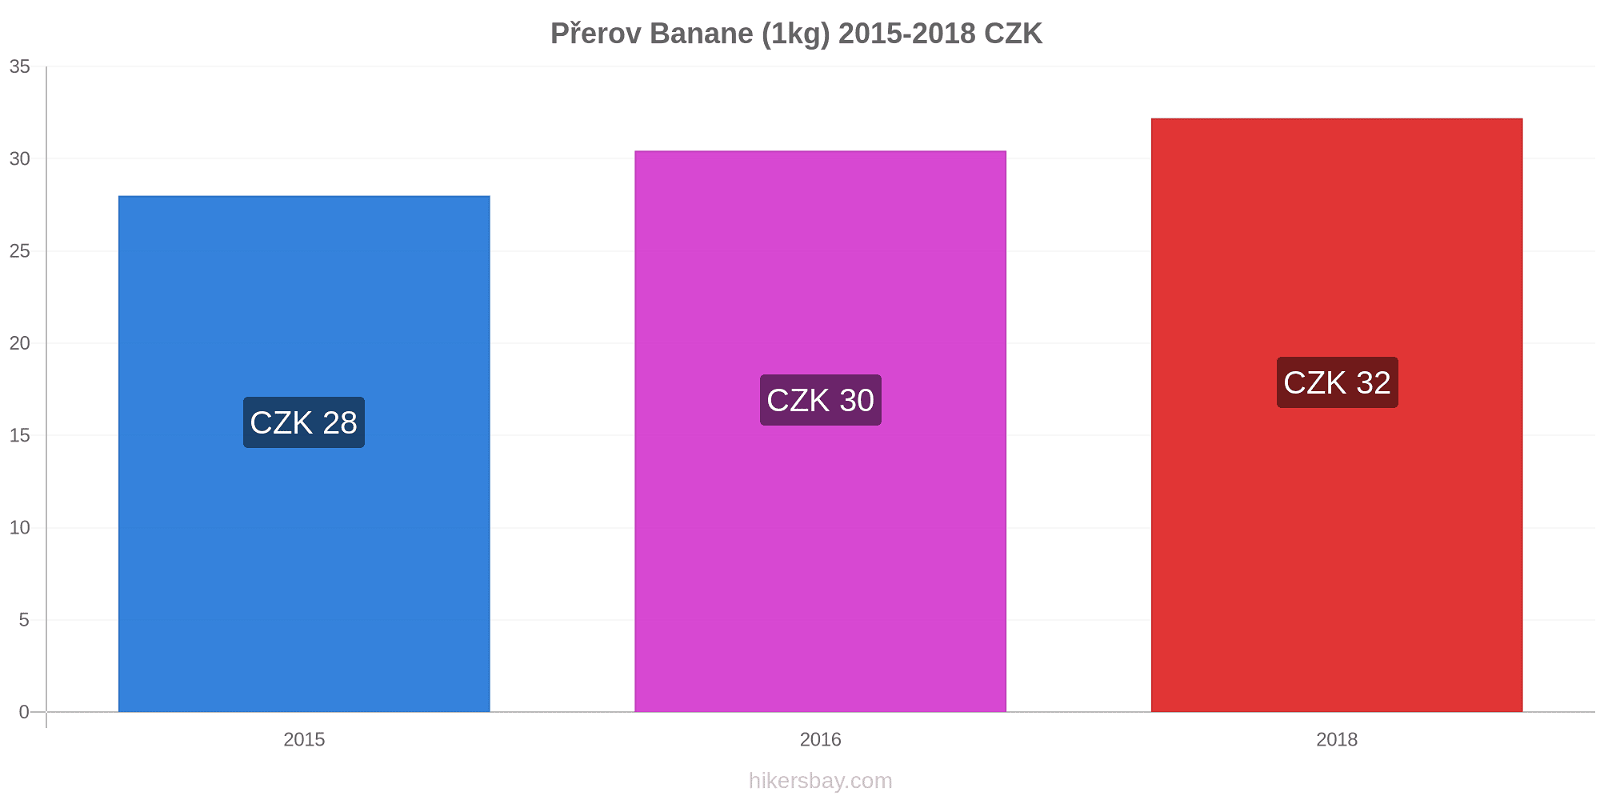 Přerov variazioni di prezzo Banana (1kg) hikersbay.com